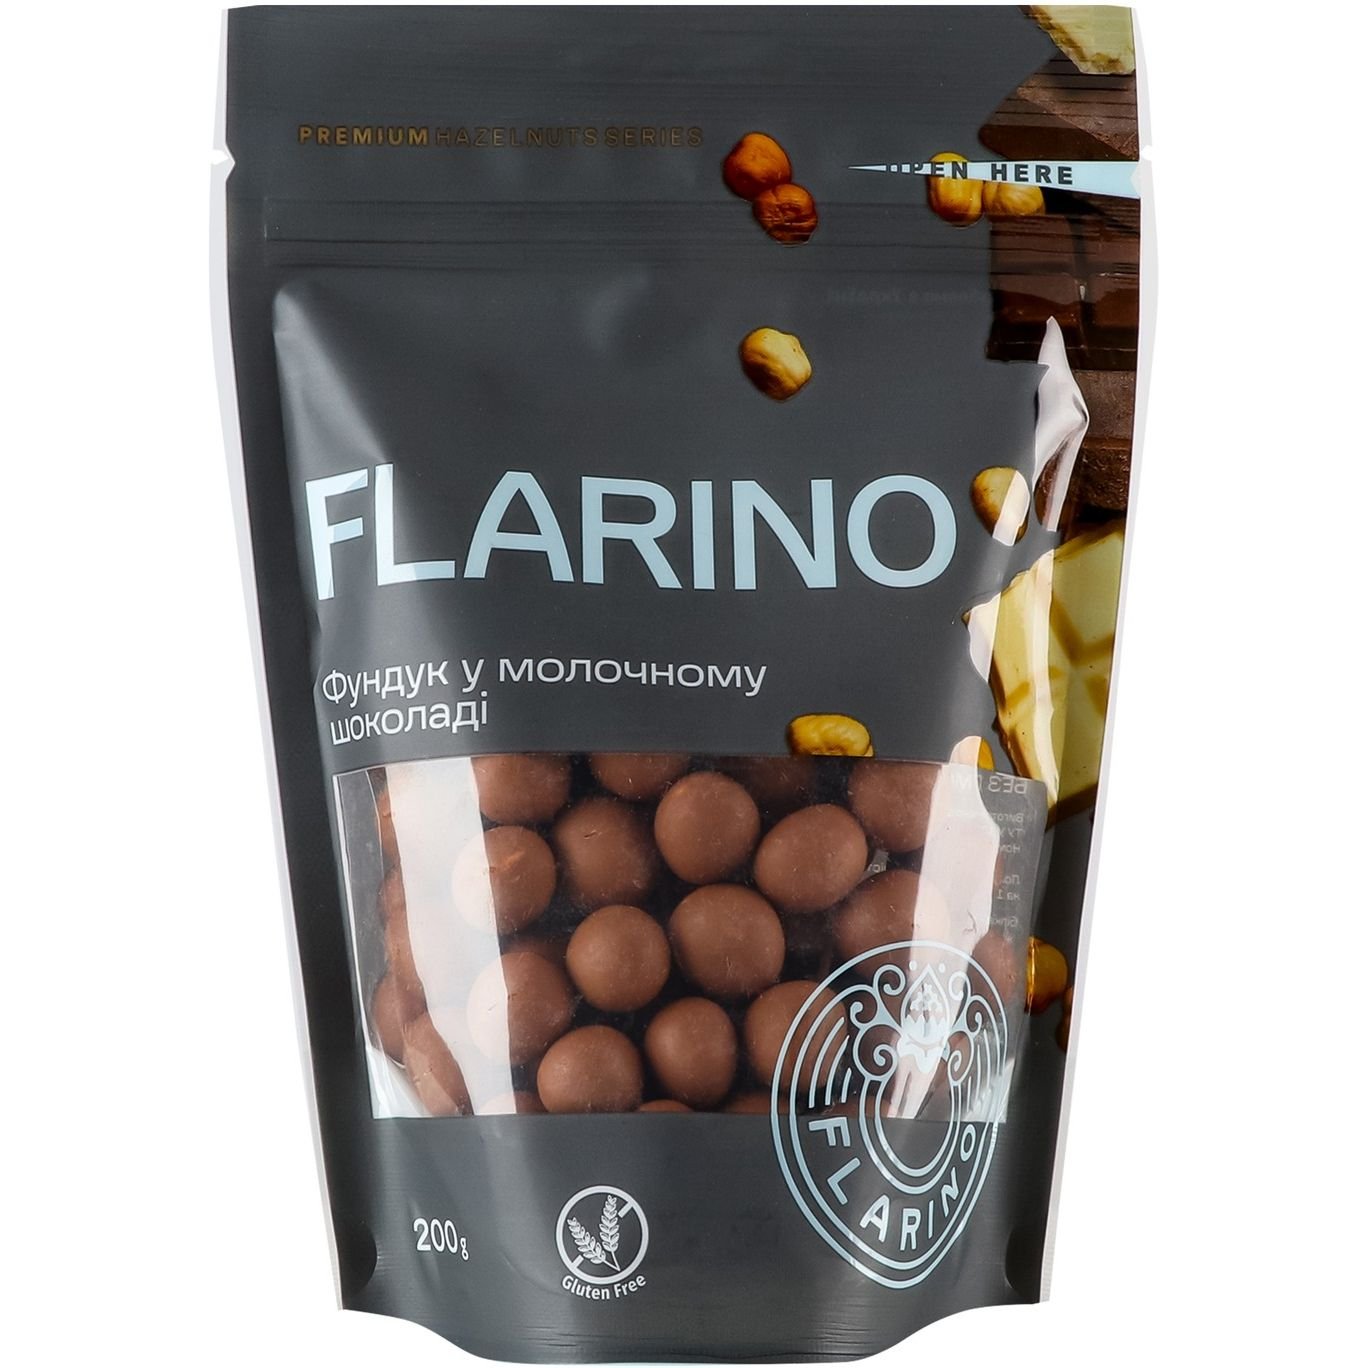 Фундук Flarino жареный в молочном шоколаде, 200 г (923103) - фото 1